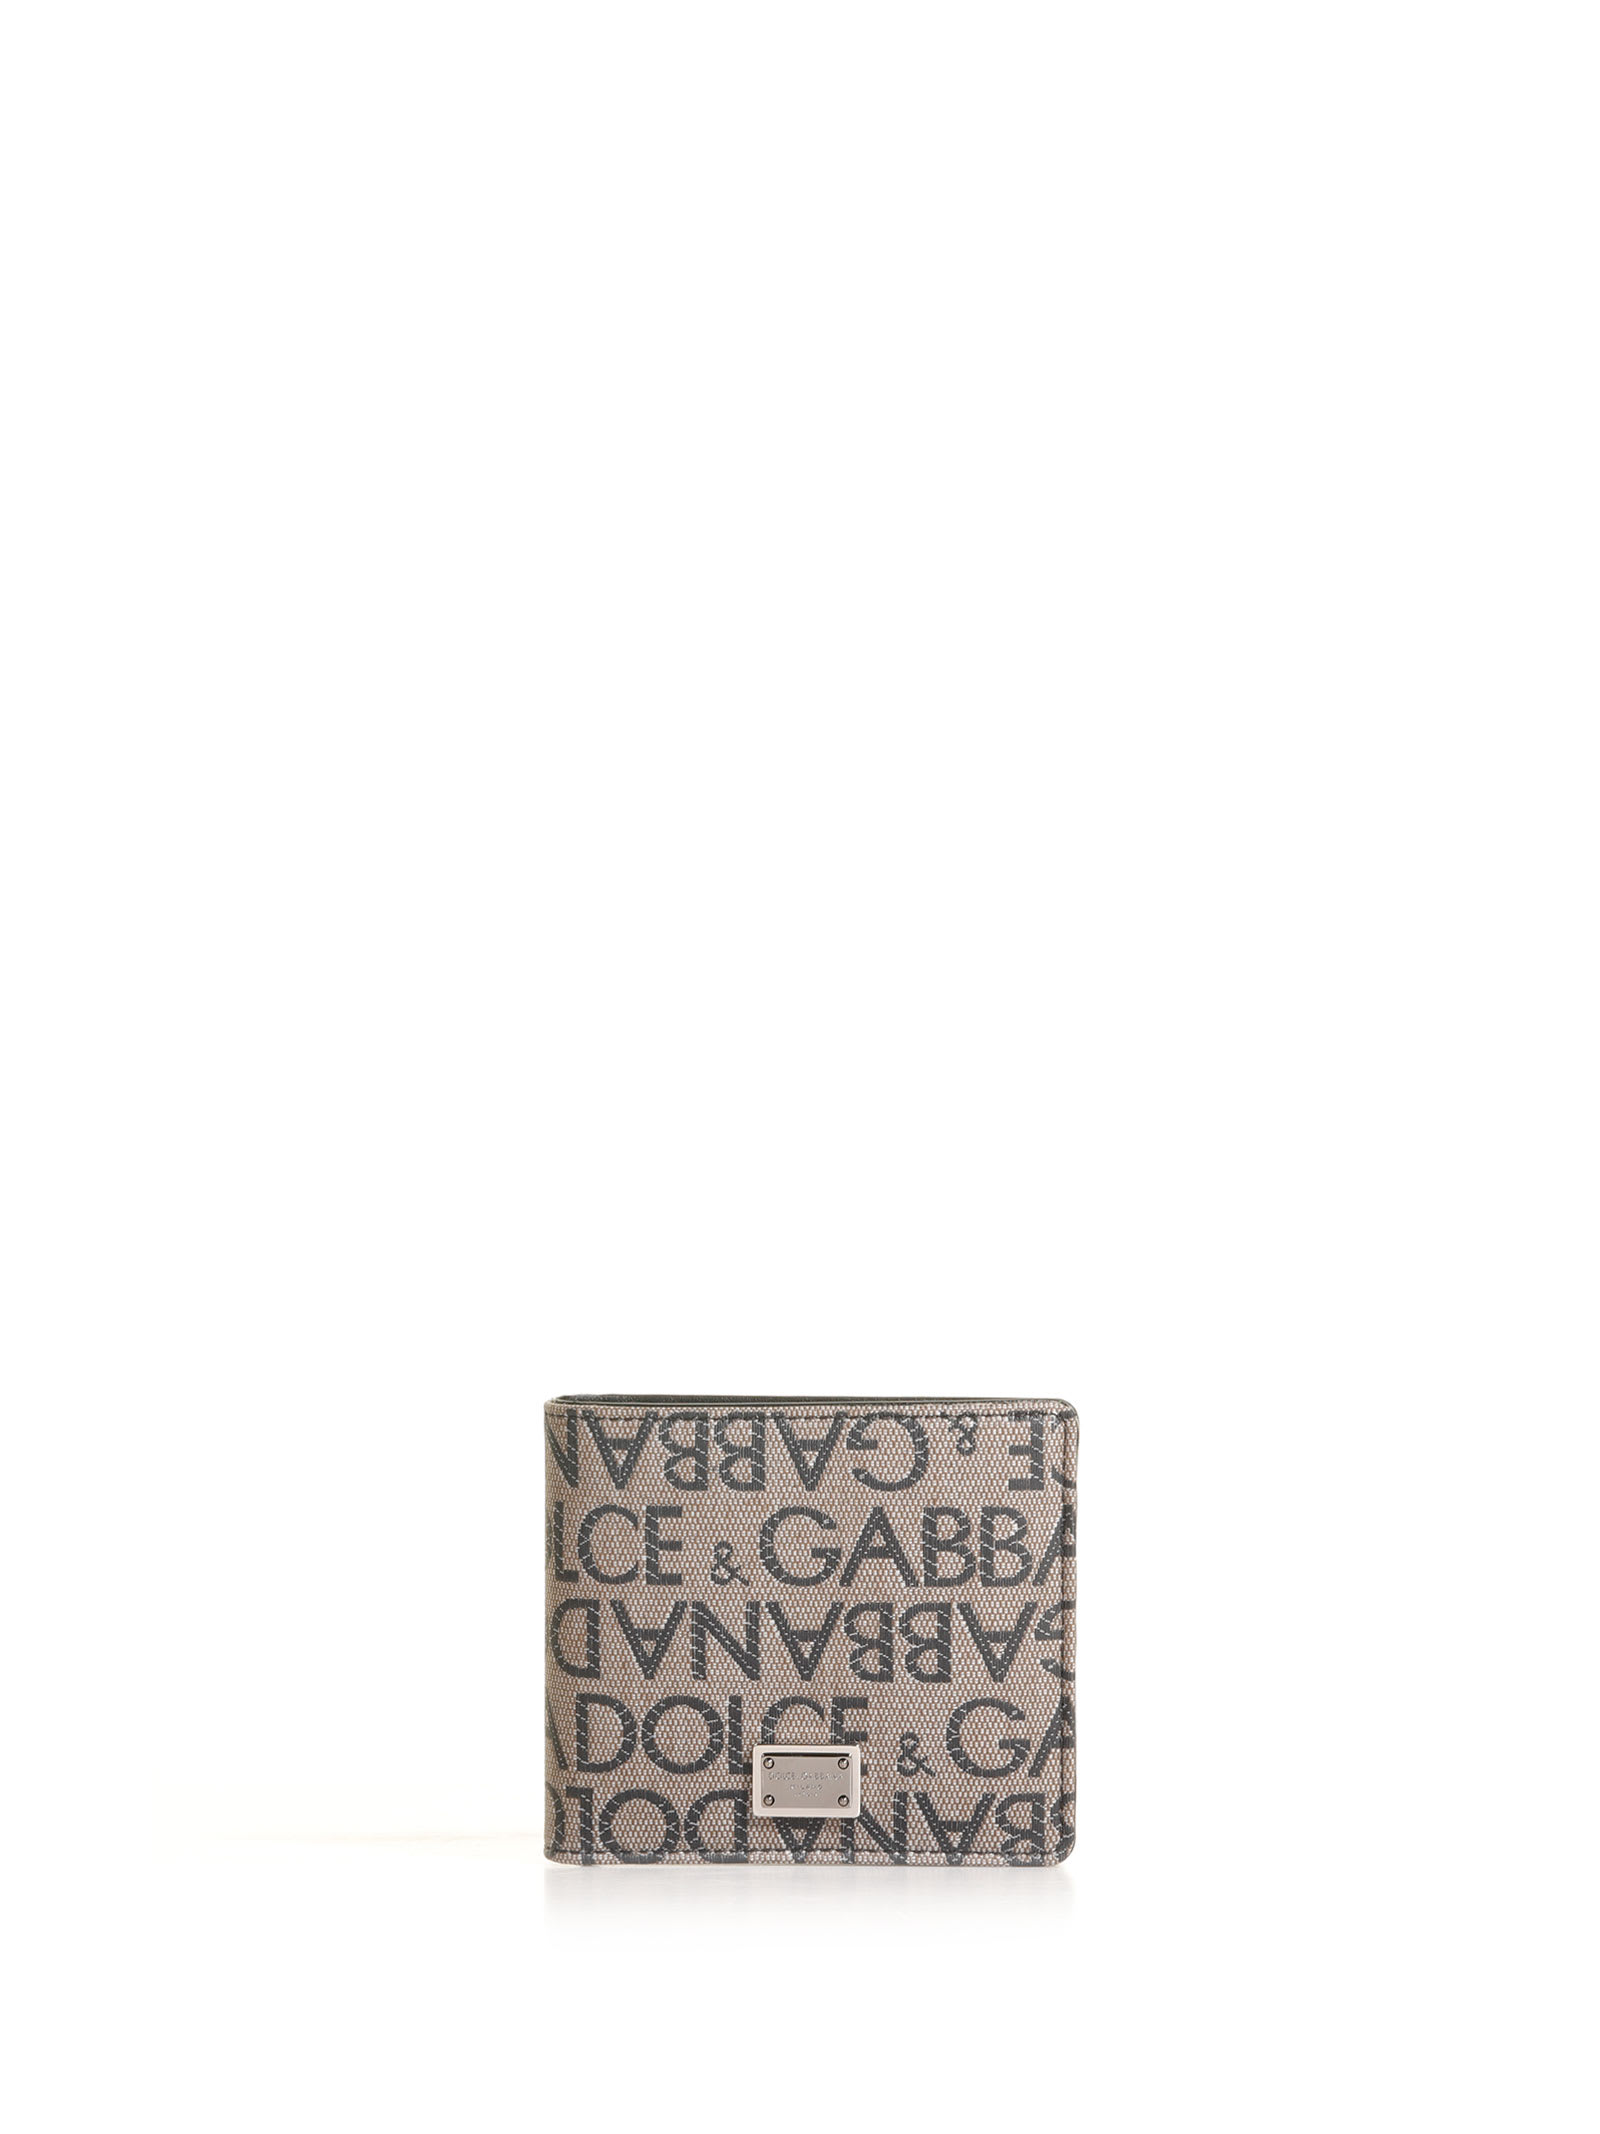 Dolce & Gabbana Jacquard Wallet In Nero Marrone